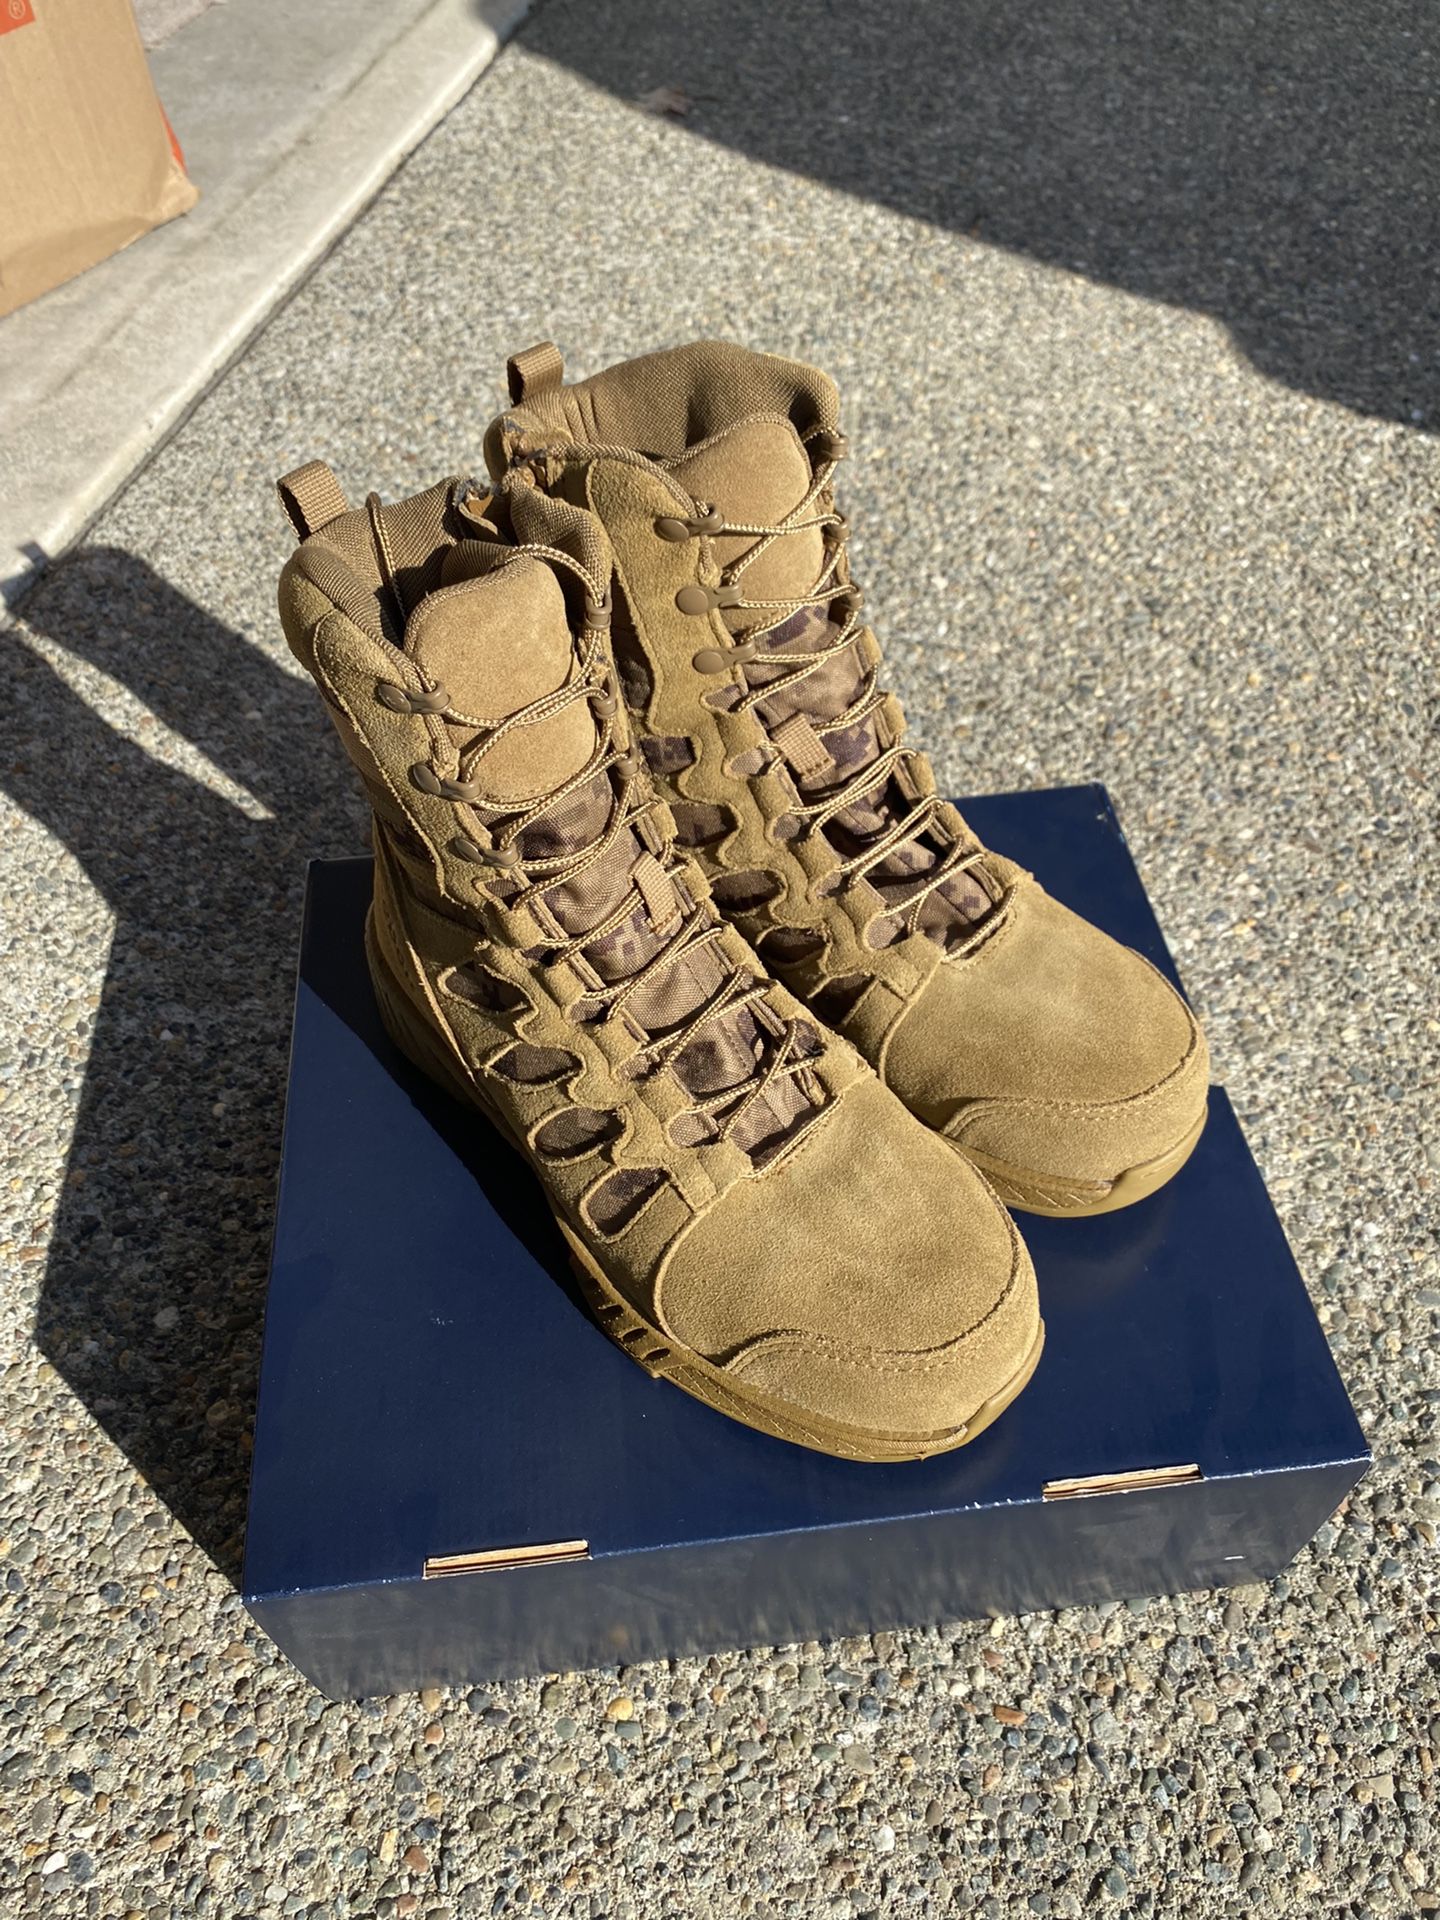 Reebok Work/Military Boots